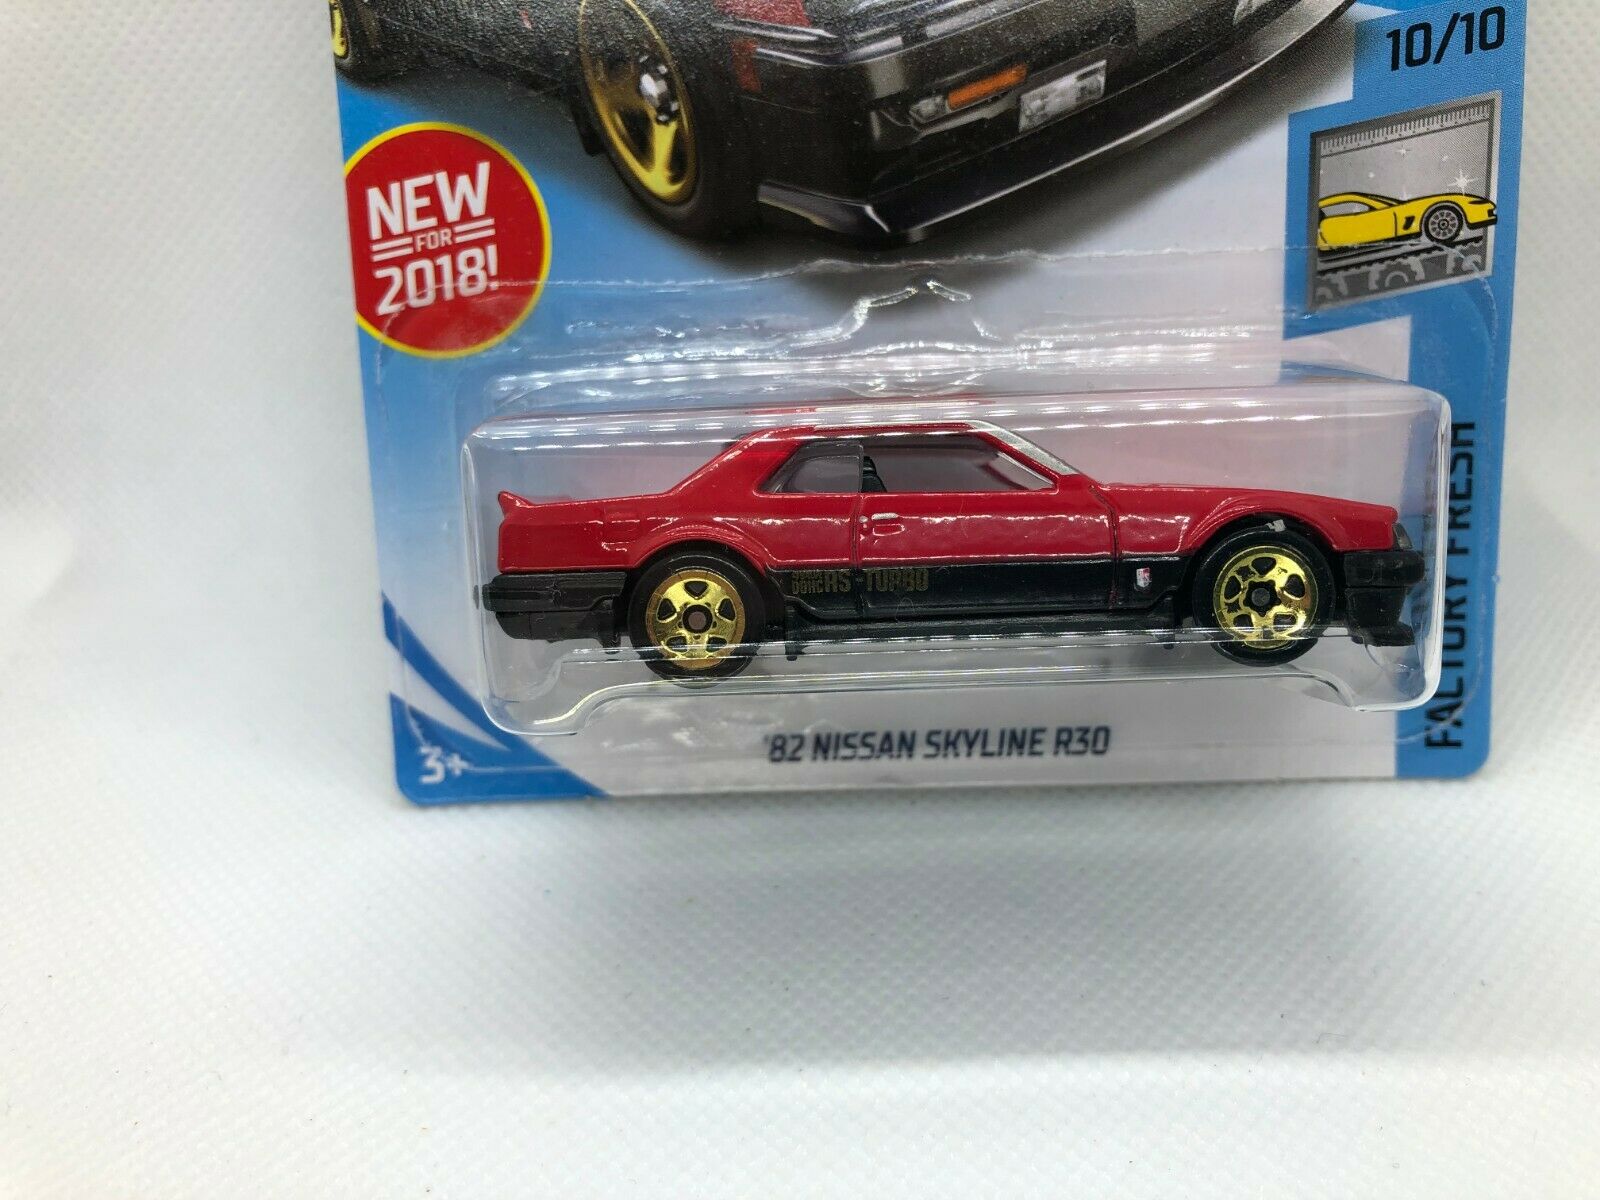 '82 Nissan Skyline R30